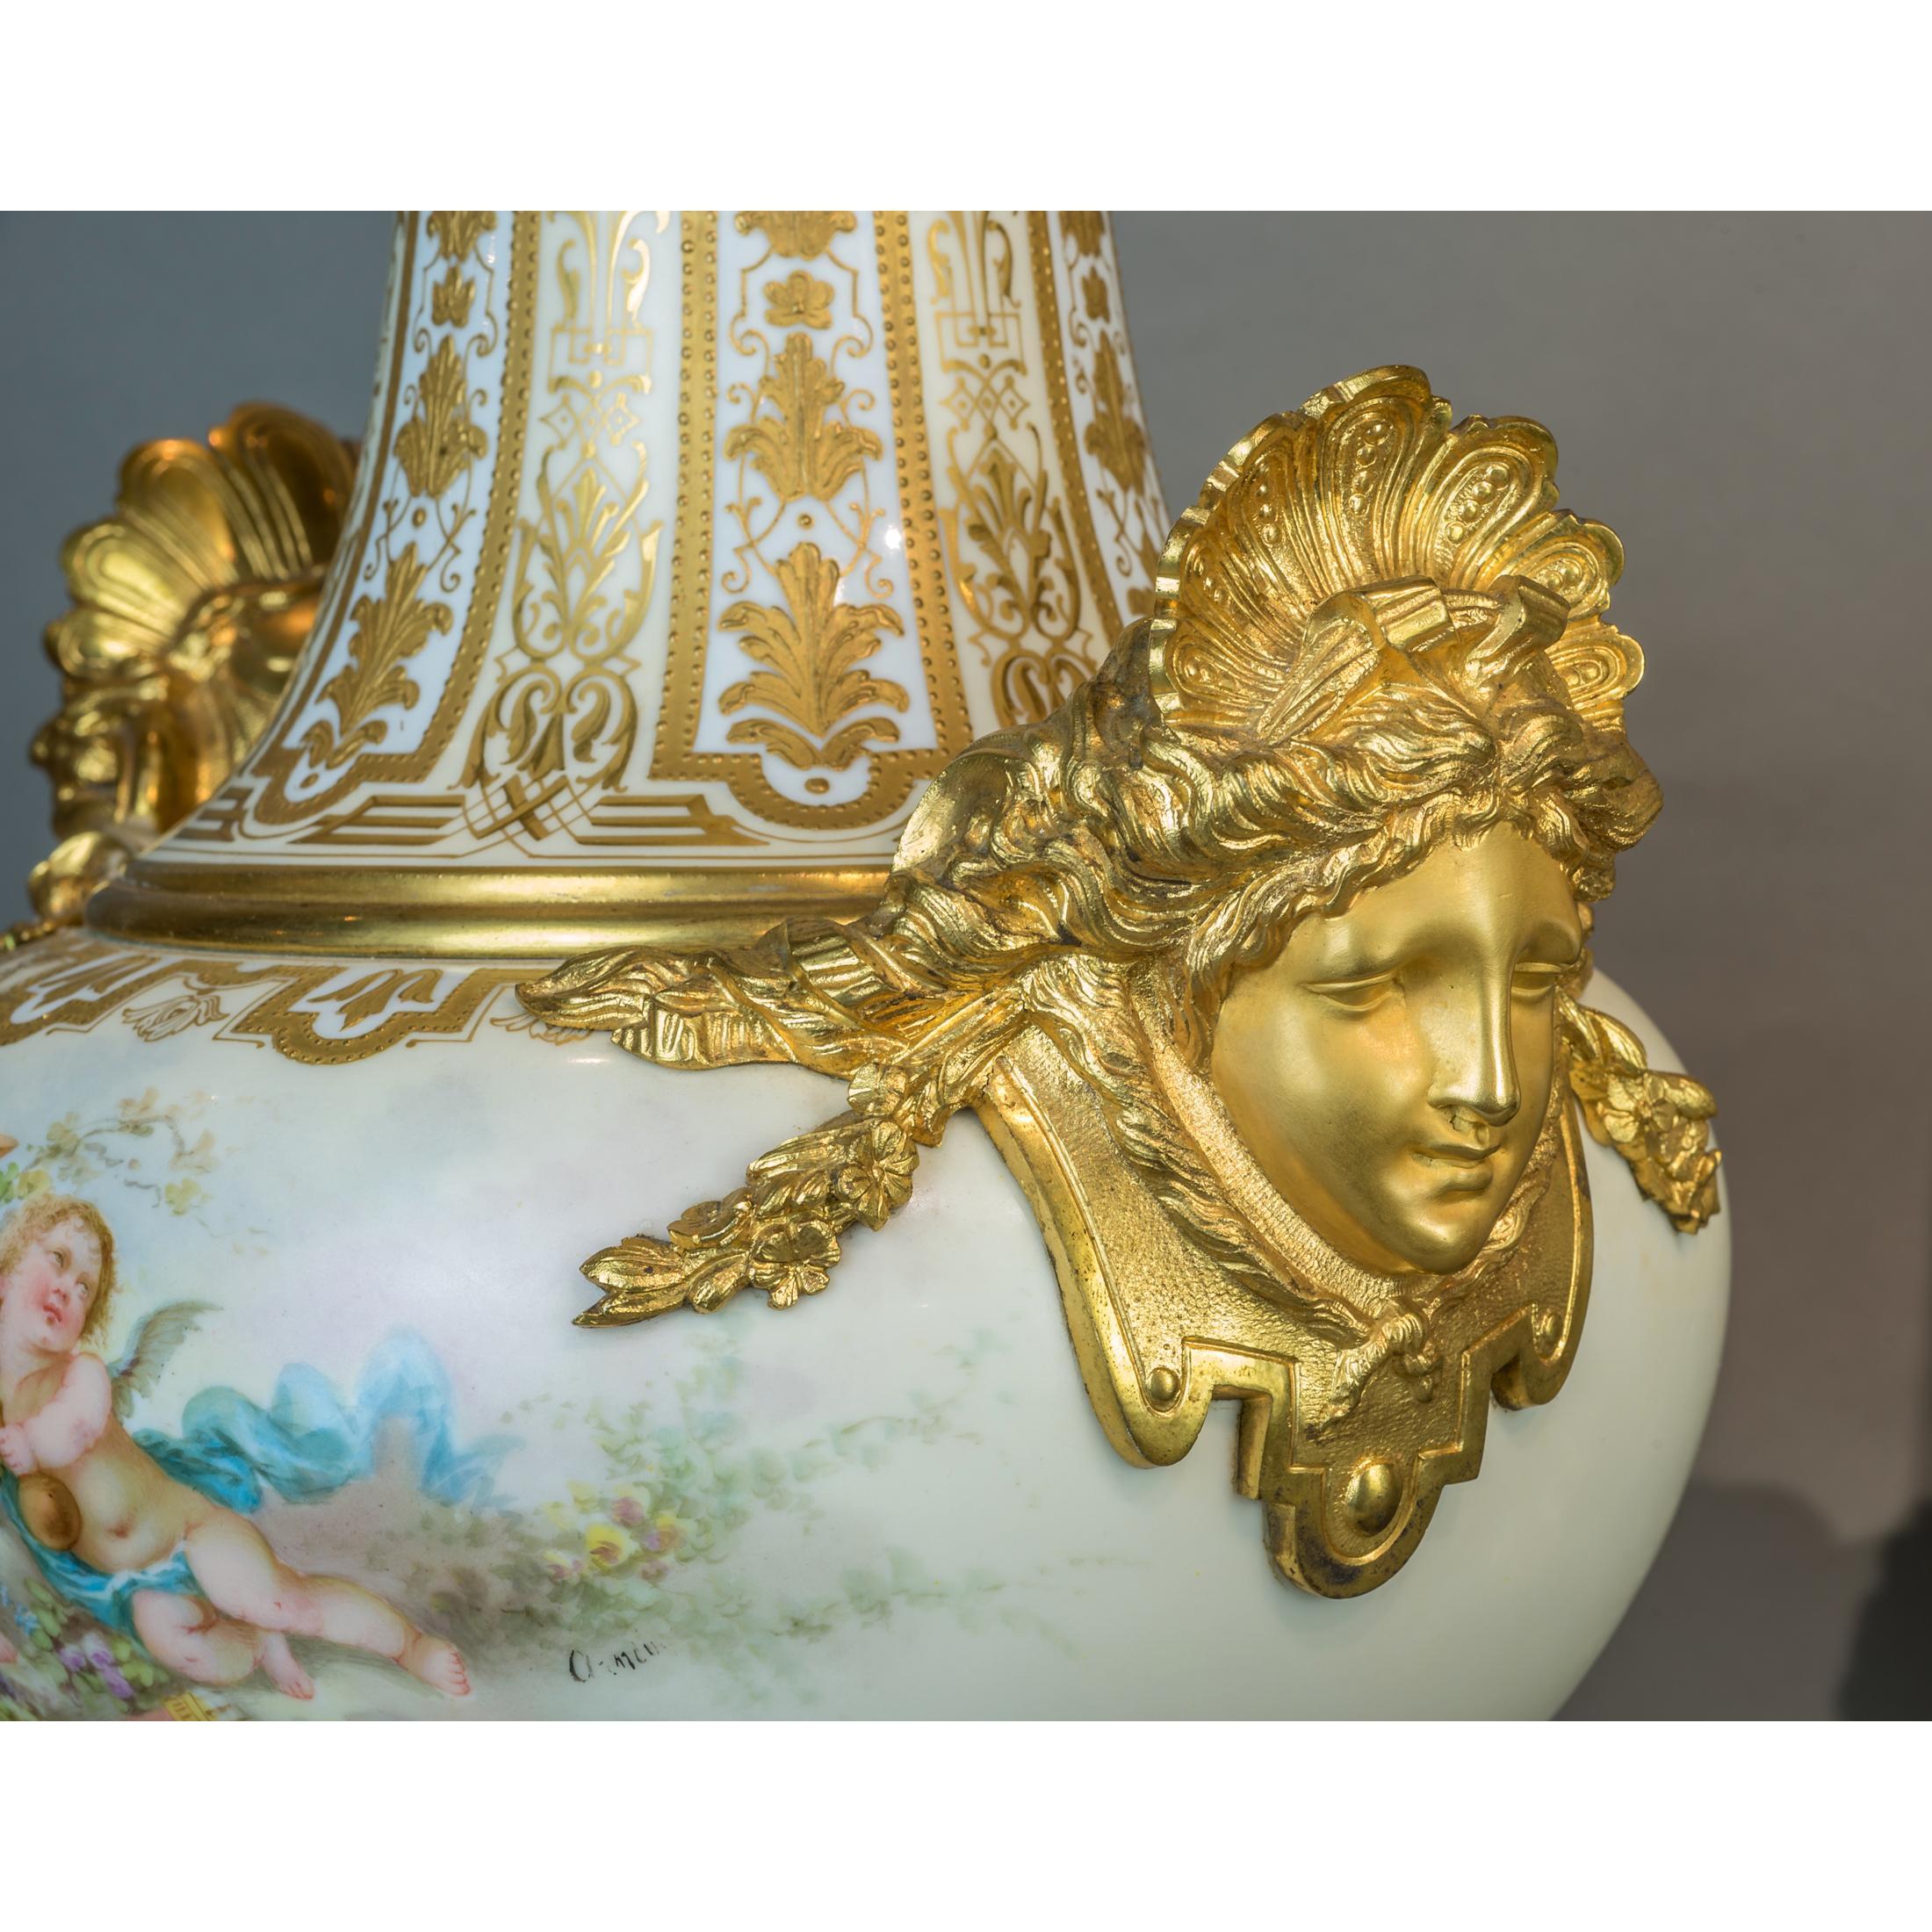 Pair of Ormolu-Mounted Sèvres-style Porcelain Champlevé Vases For Sale 6